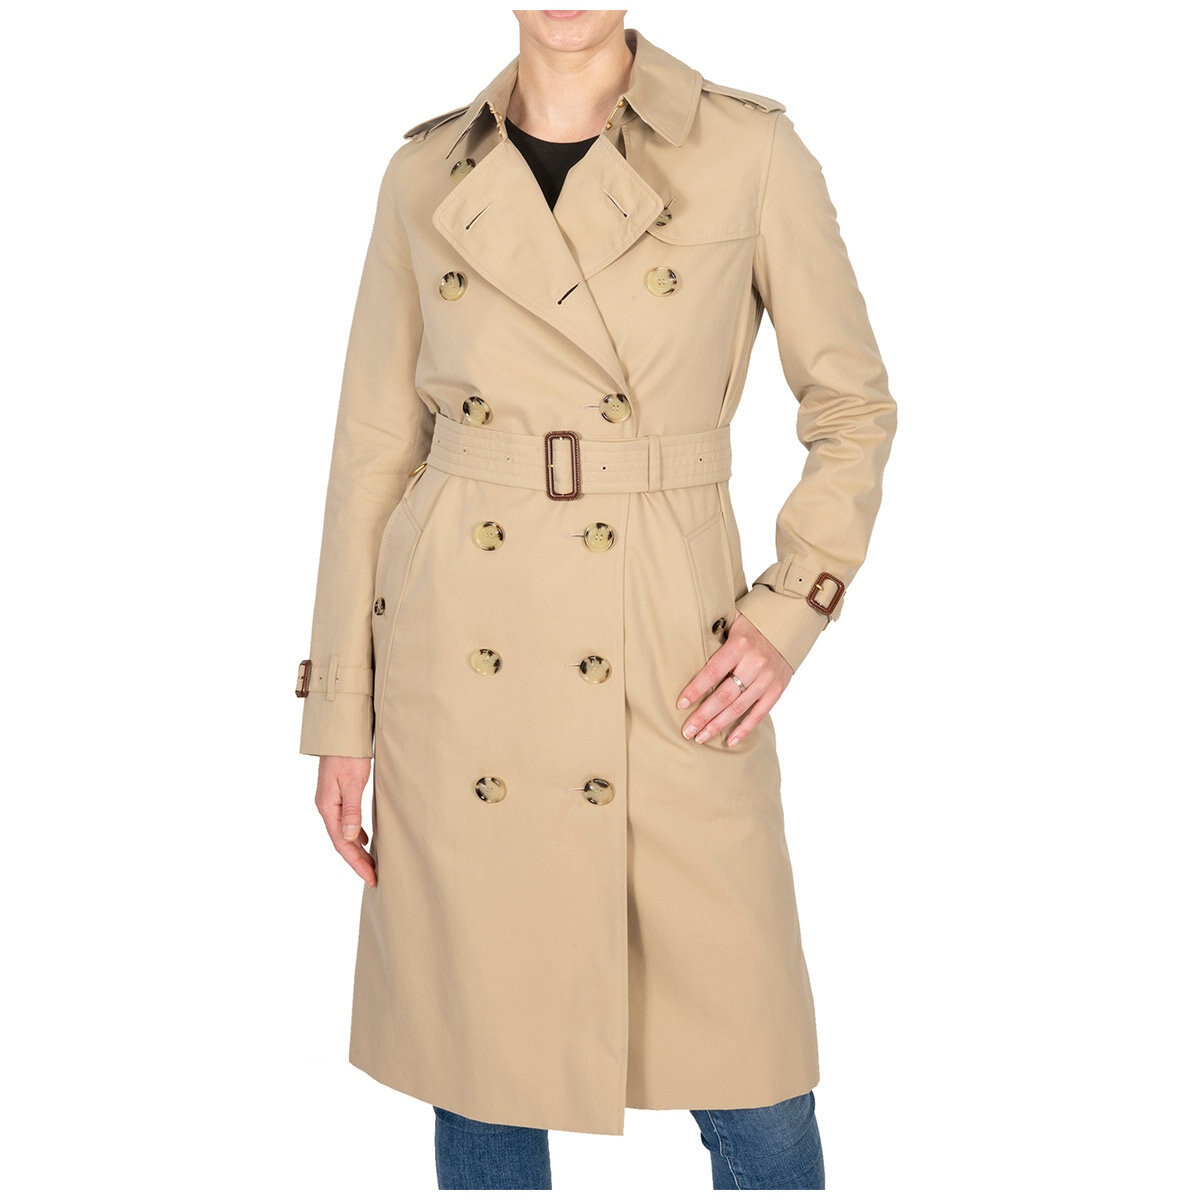 burberry trench coat